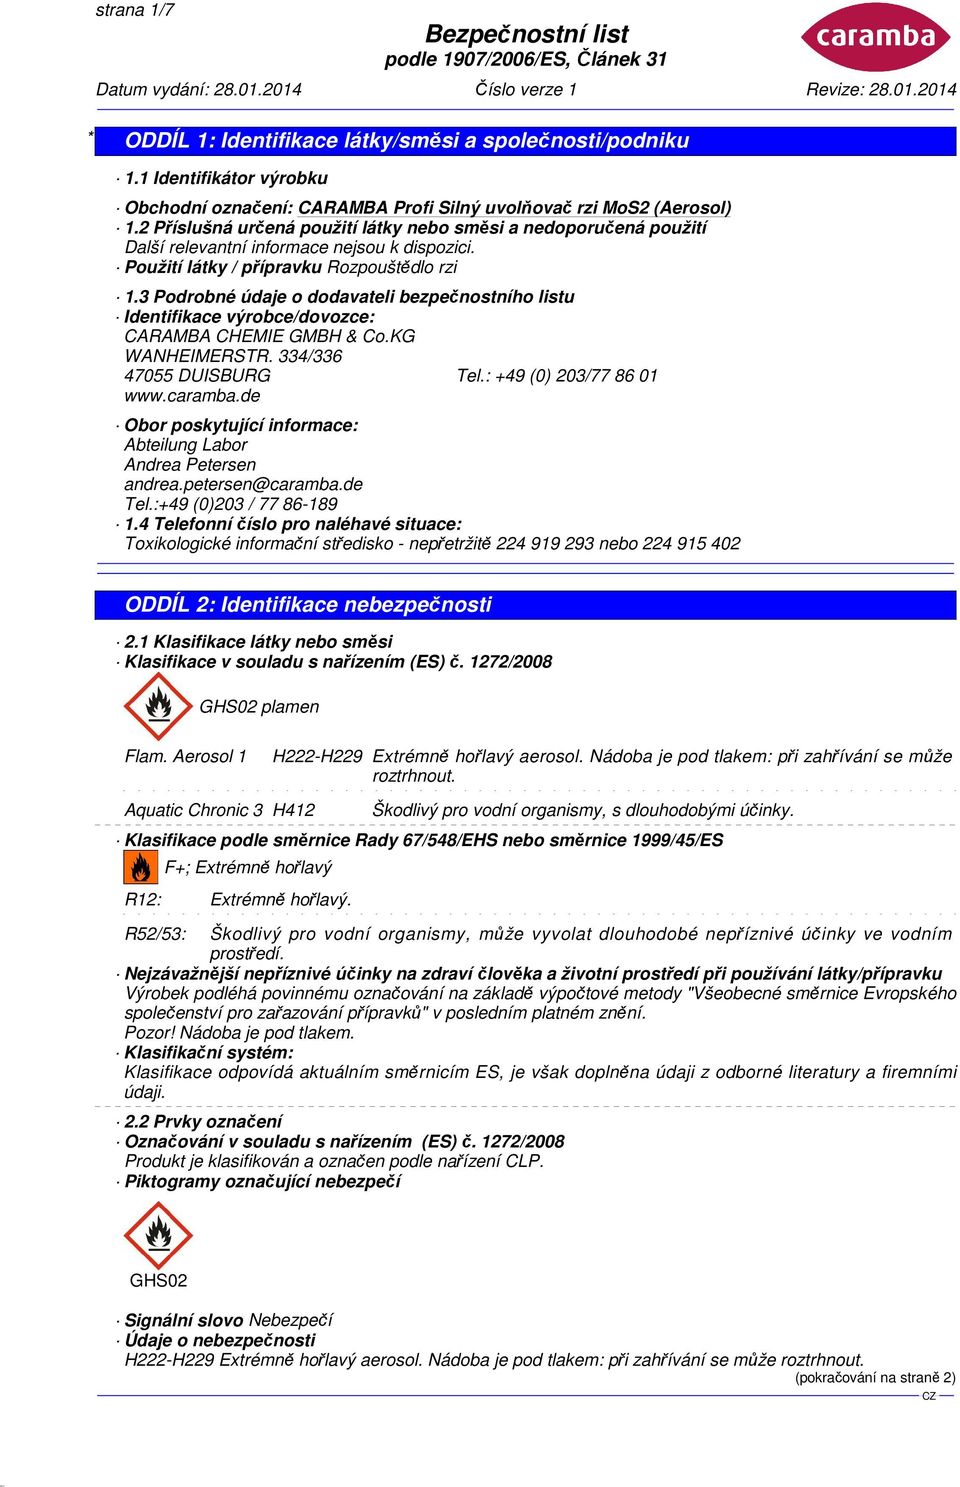 3 Podrobné údaje o dodavateli bezpečnostního listu Identifikace výrobce/dovozce: CARAMBA CHEMIE GMBH & Co.KG WANHEIMERSTR. 334/336 47055 DUISBURG Tel.: +49 (0) 203/77 86 01 www.caramba.